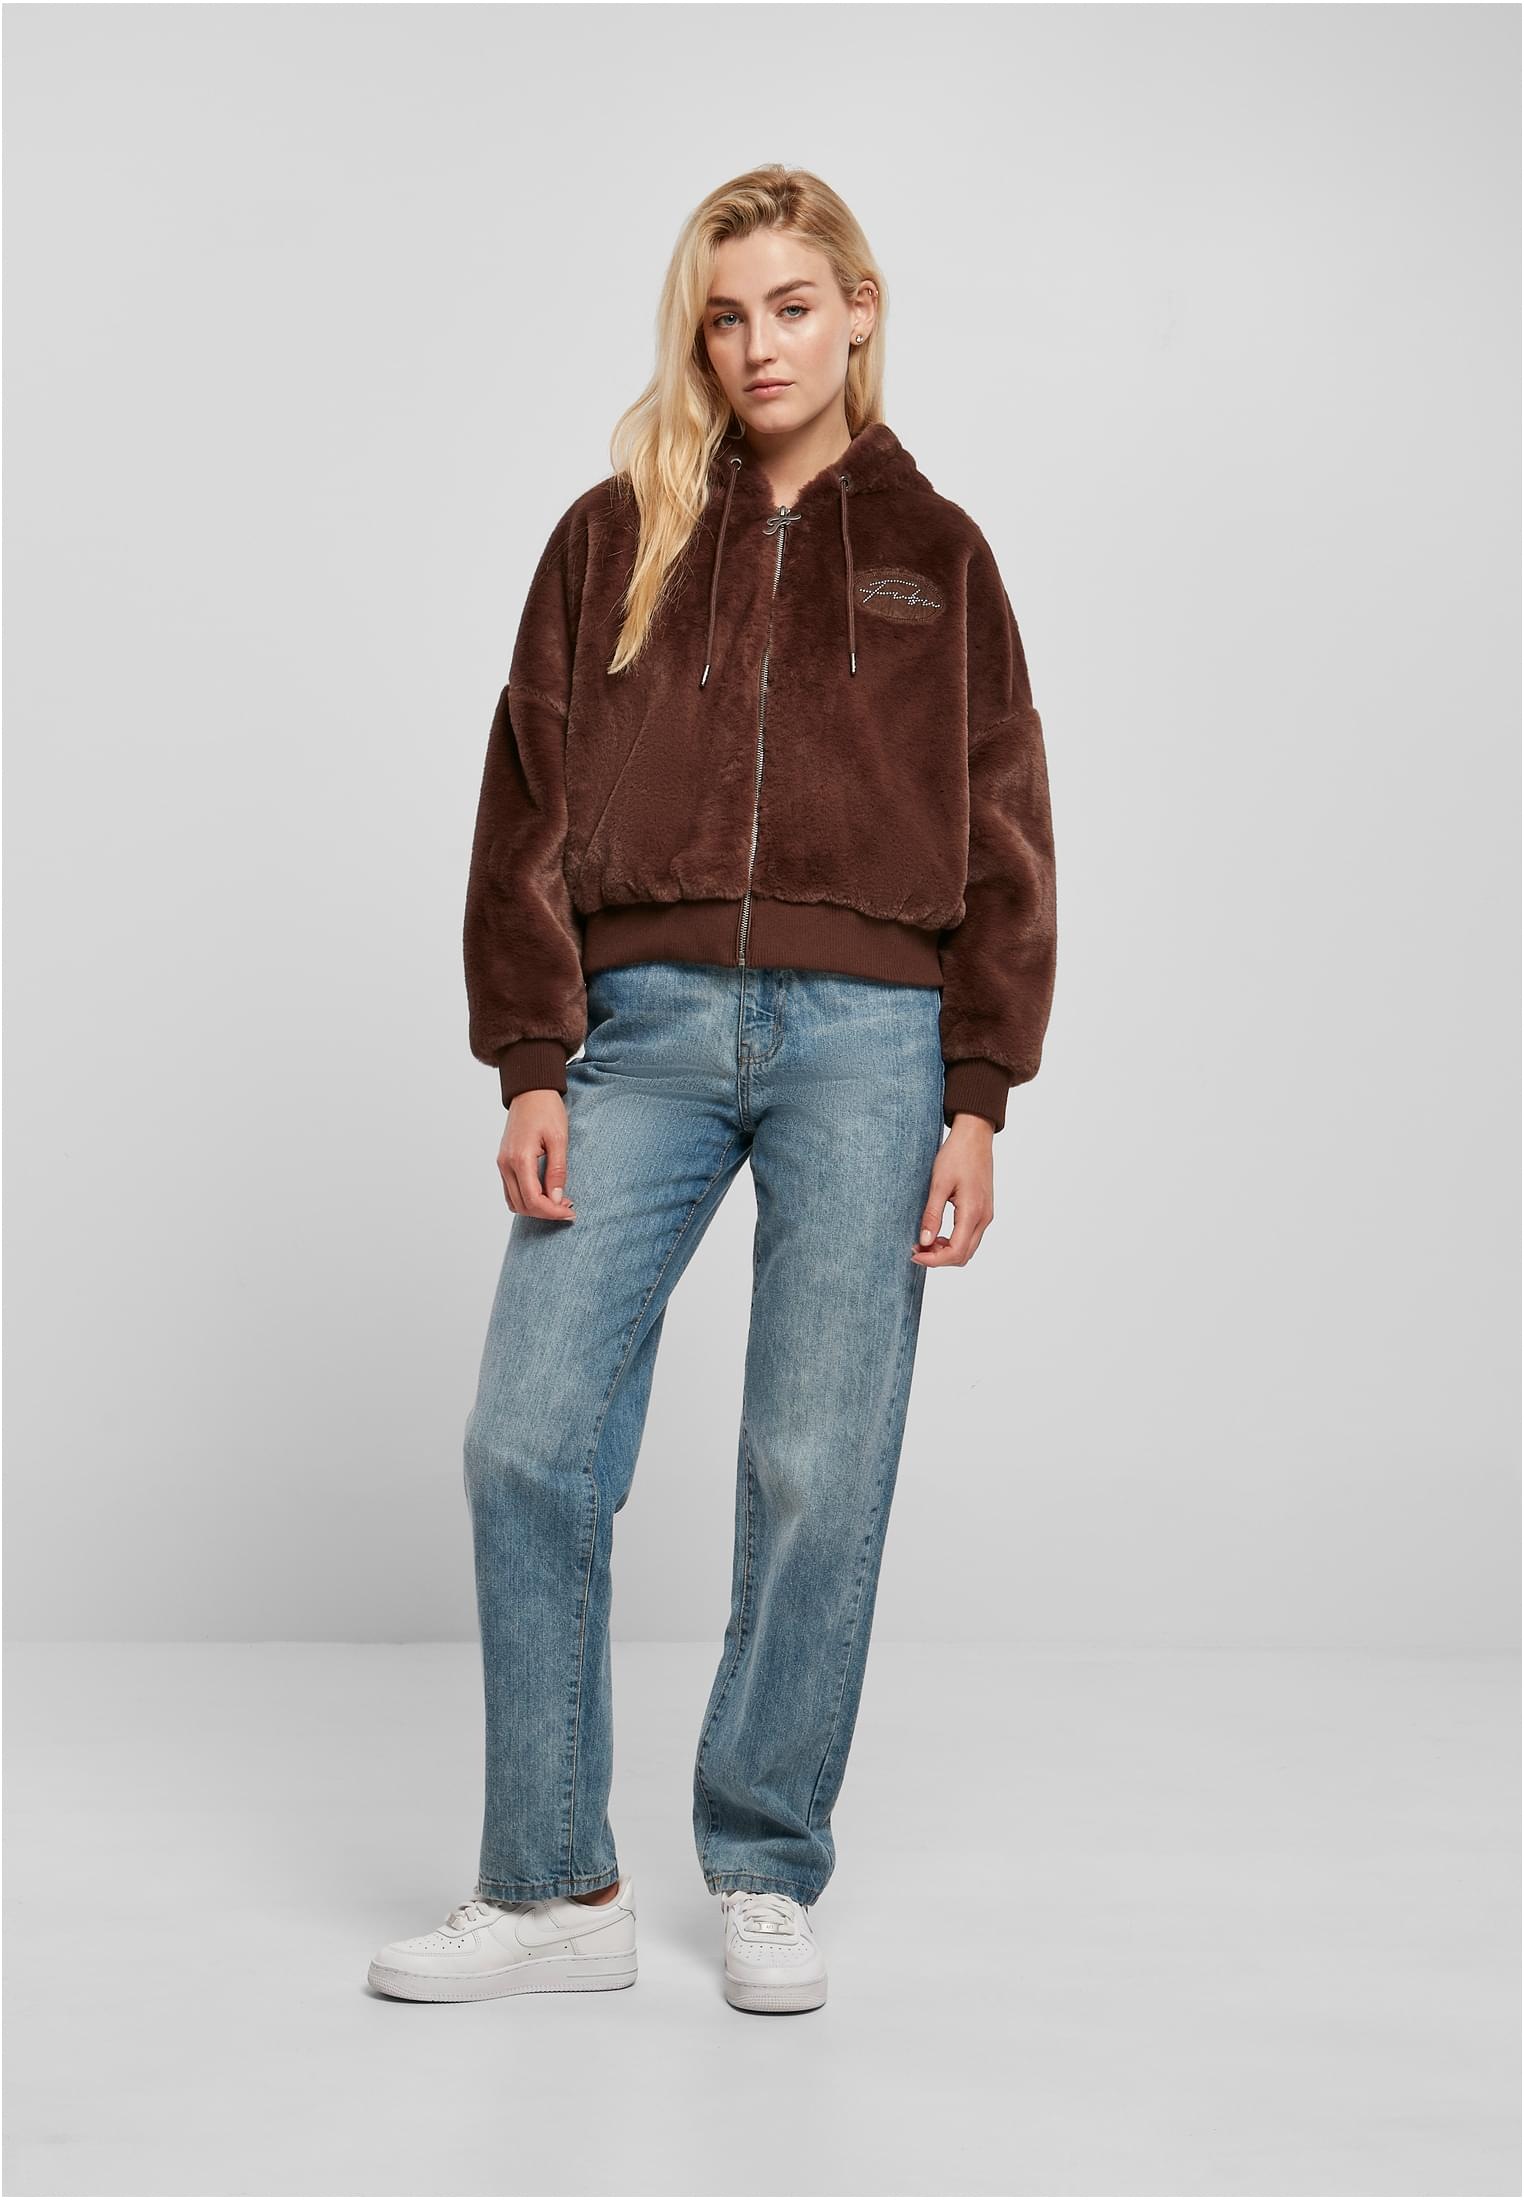 Sommerjacke brown«, BAUR Rhinestone Jacket Signature kaufen | FW224-022-1 Kapuze (1 »Damen St.), Fubu Fur ohne